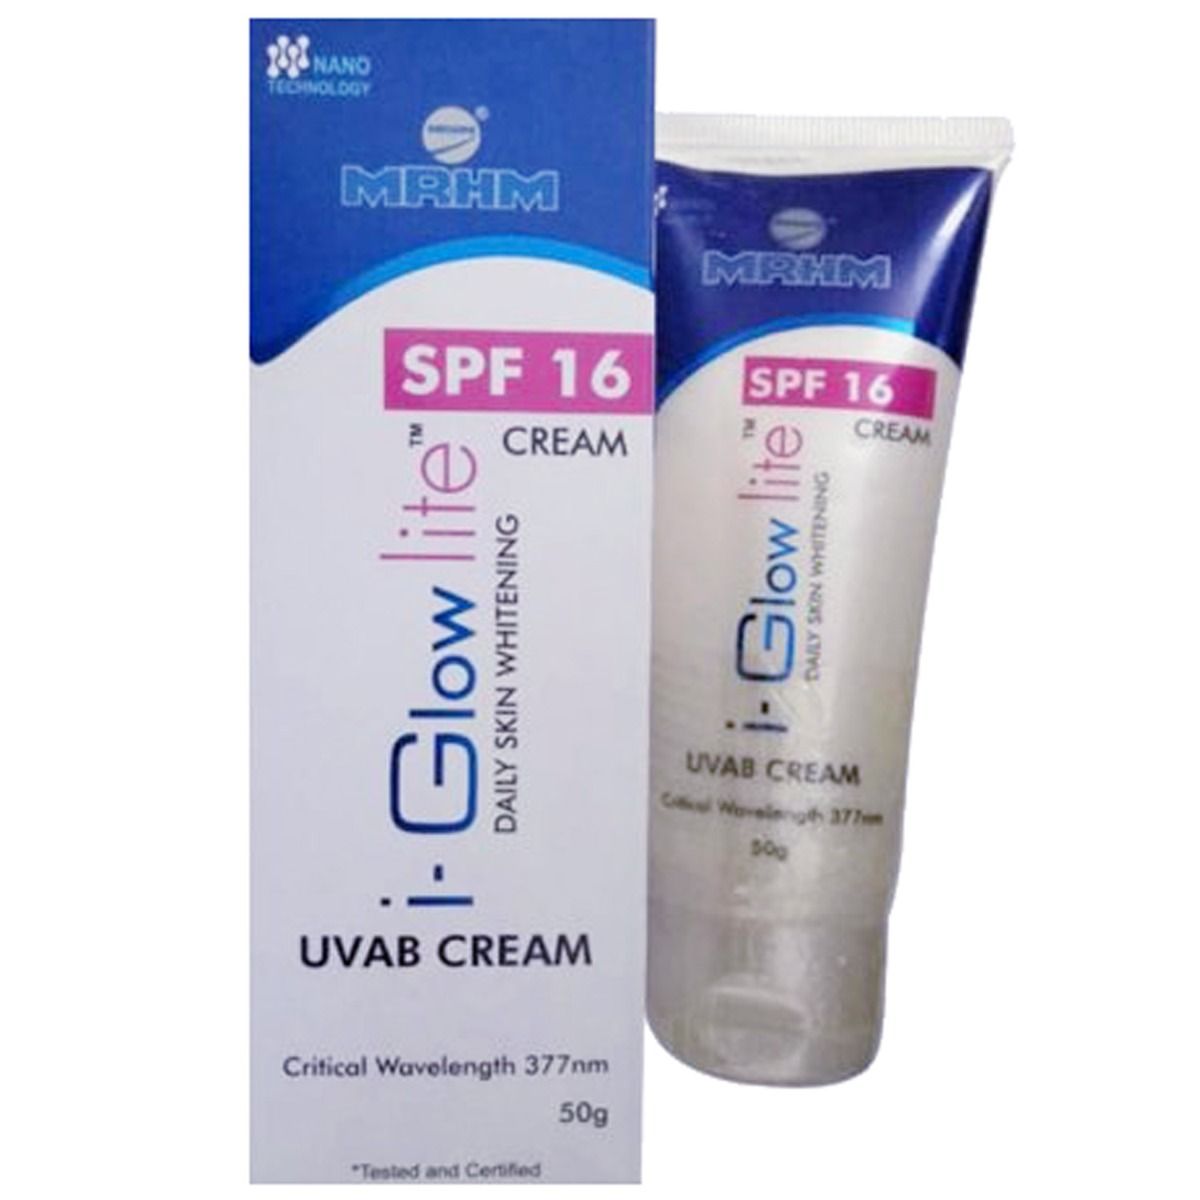 I-Glow Lite Spf-16 Cream 50 gm, Pack of 1 